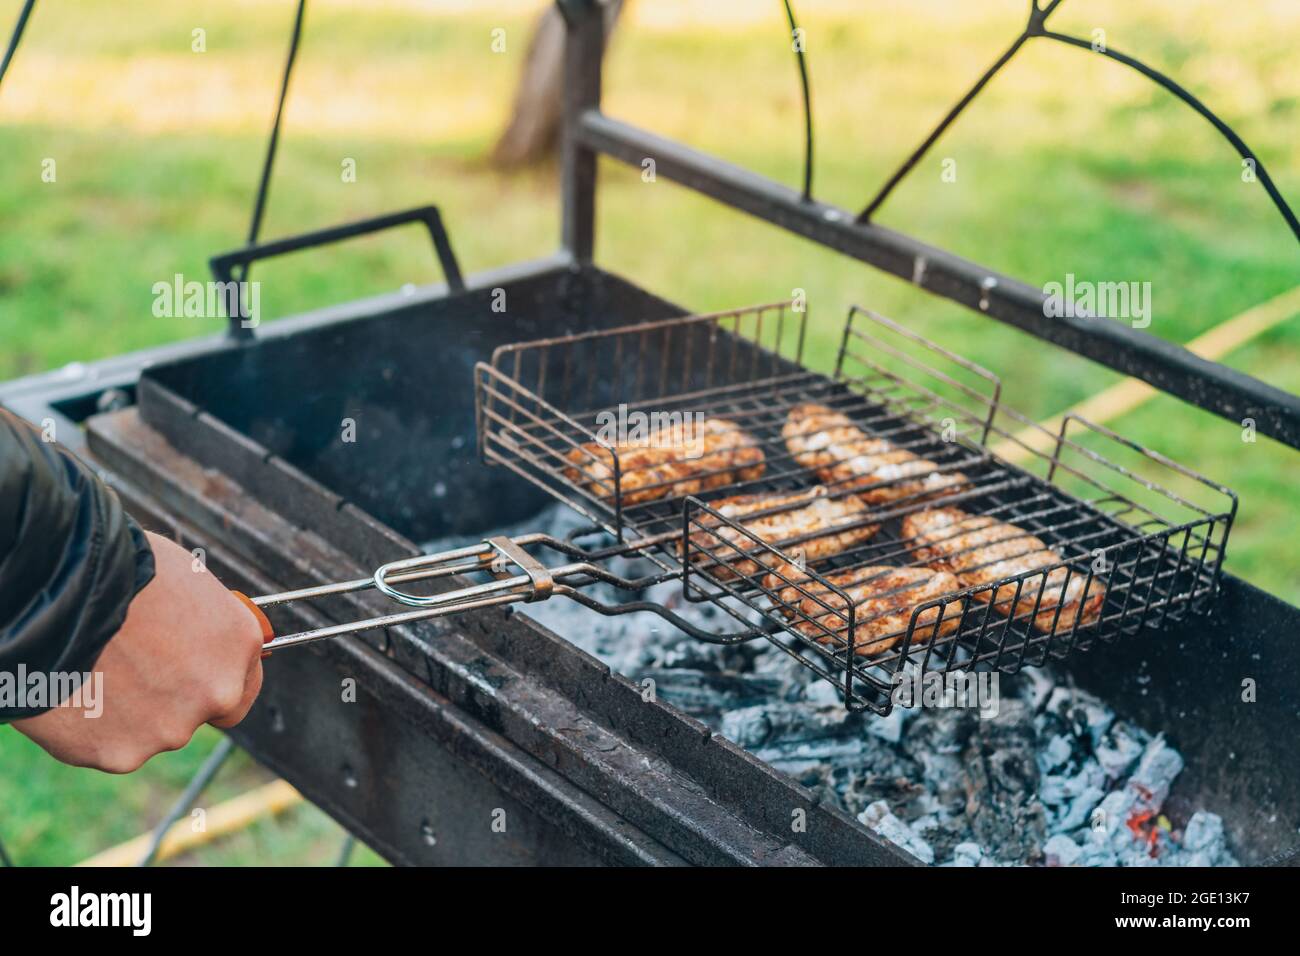 La mano masculina da vuelta a la carne frita cruda en brochetas se cocina  en parrilla de carbón. Cocinar barbacoa al aire libre Fotografía de stock -  Alamy